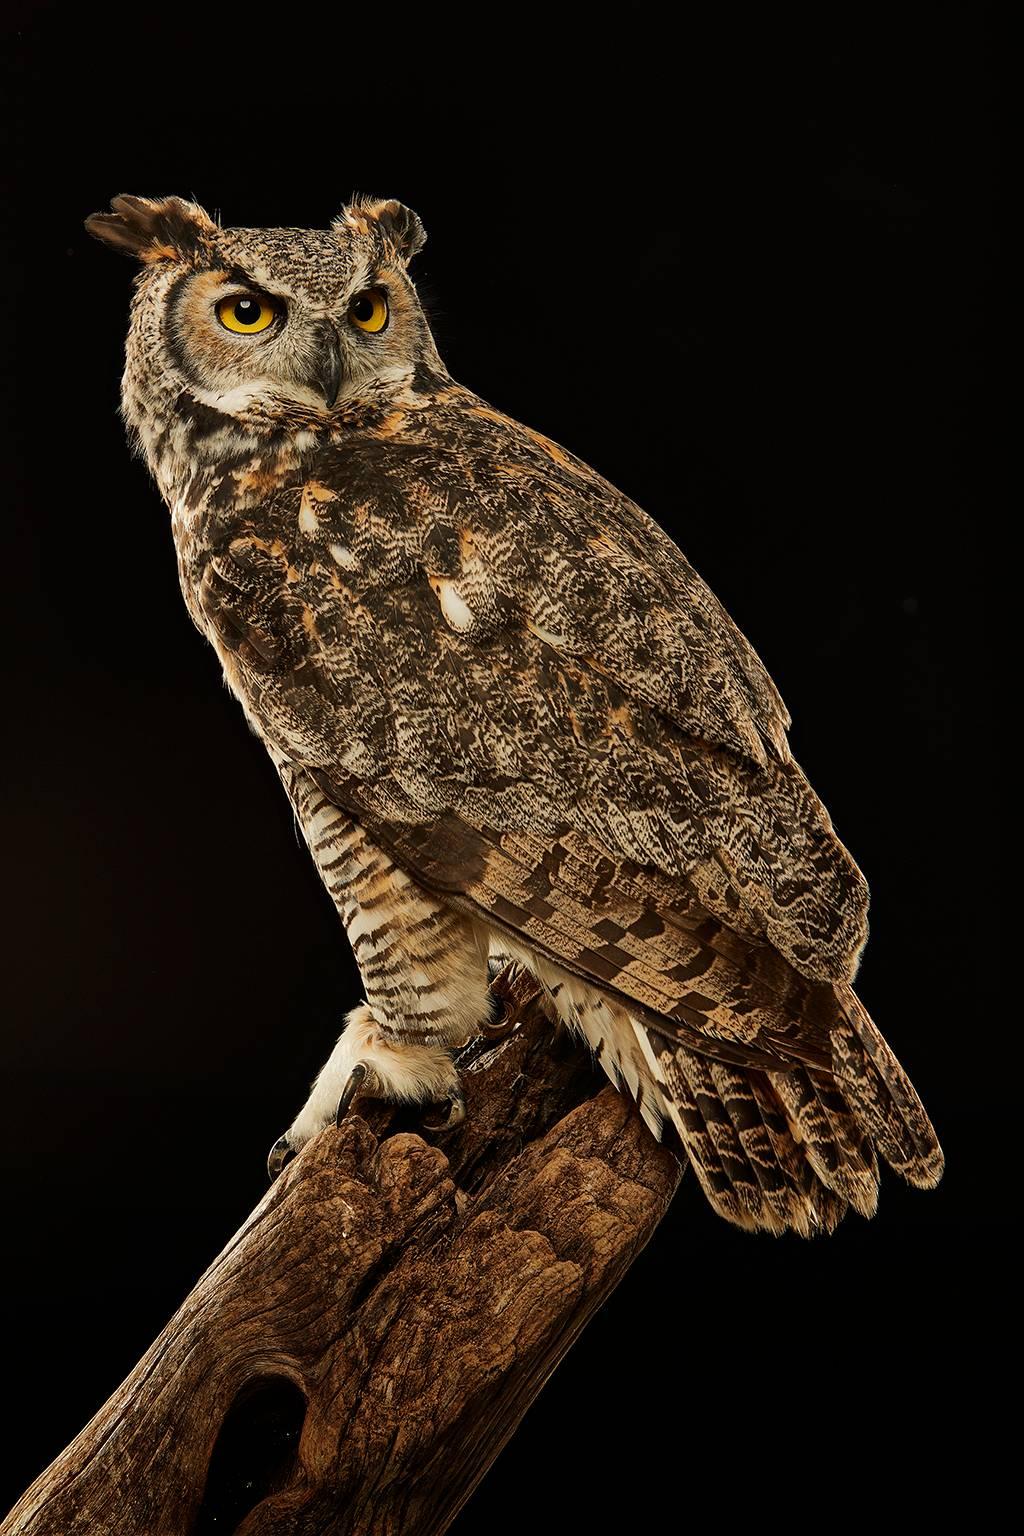 Chris Gordaneer Color Photograph - Birds of Prey - Great Horned Owl No. 15